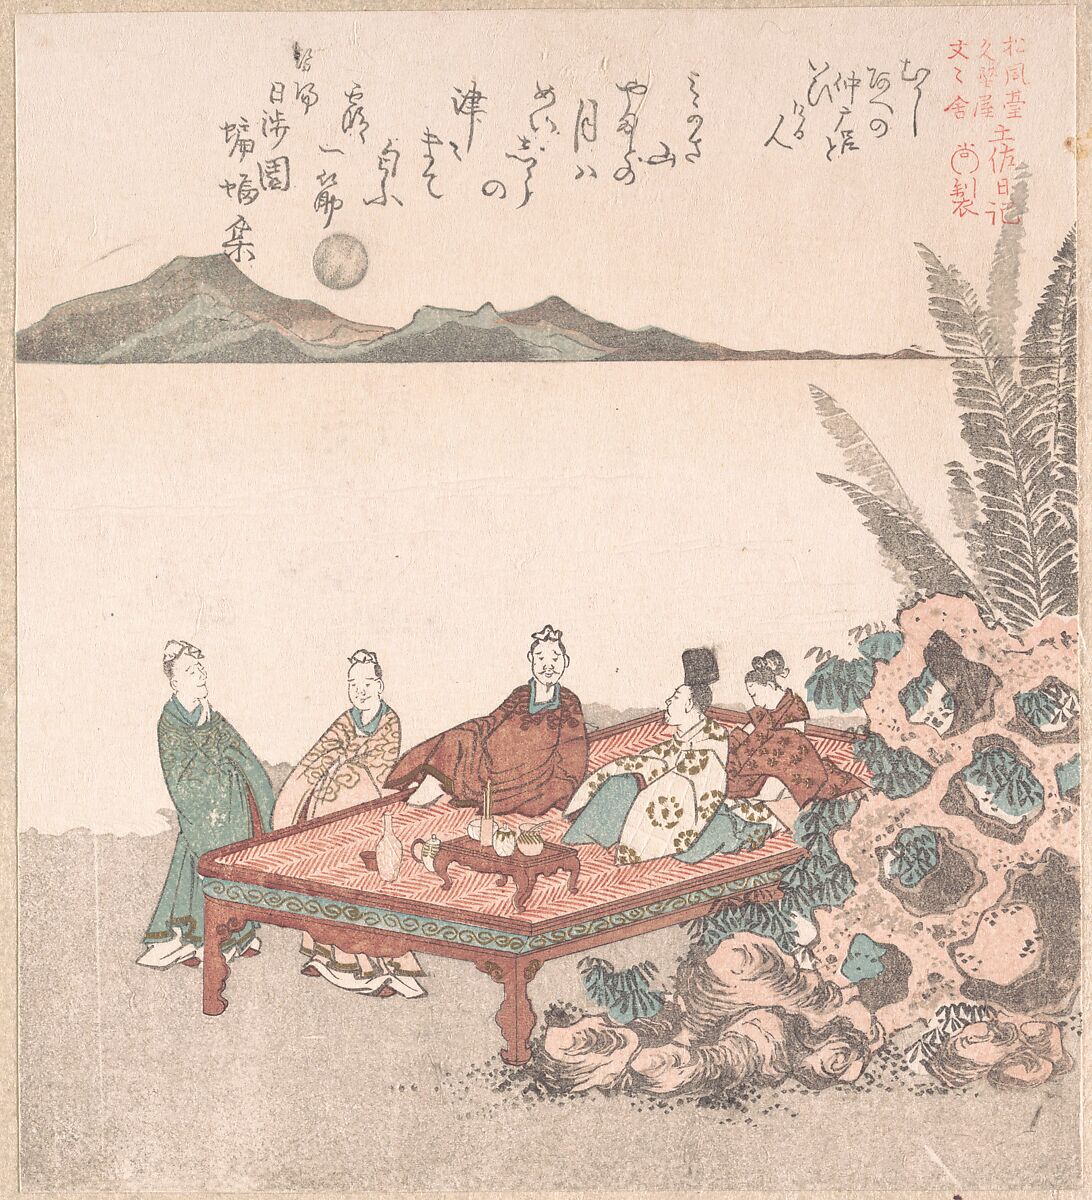 Nanamaro and His Followers Looking at the Moon in China, Kubo Shunman (Japanese, 1757–1820) (?), Woodblock print (surimono); ink and color on paper, Japan 